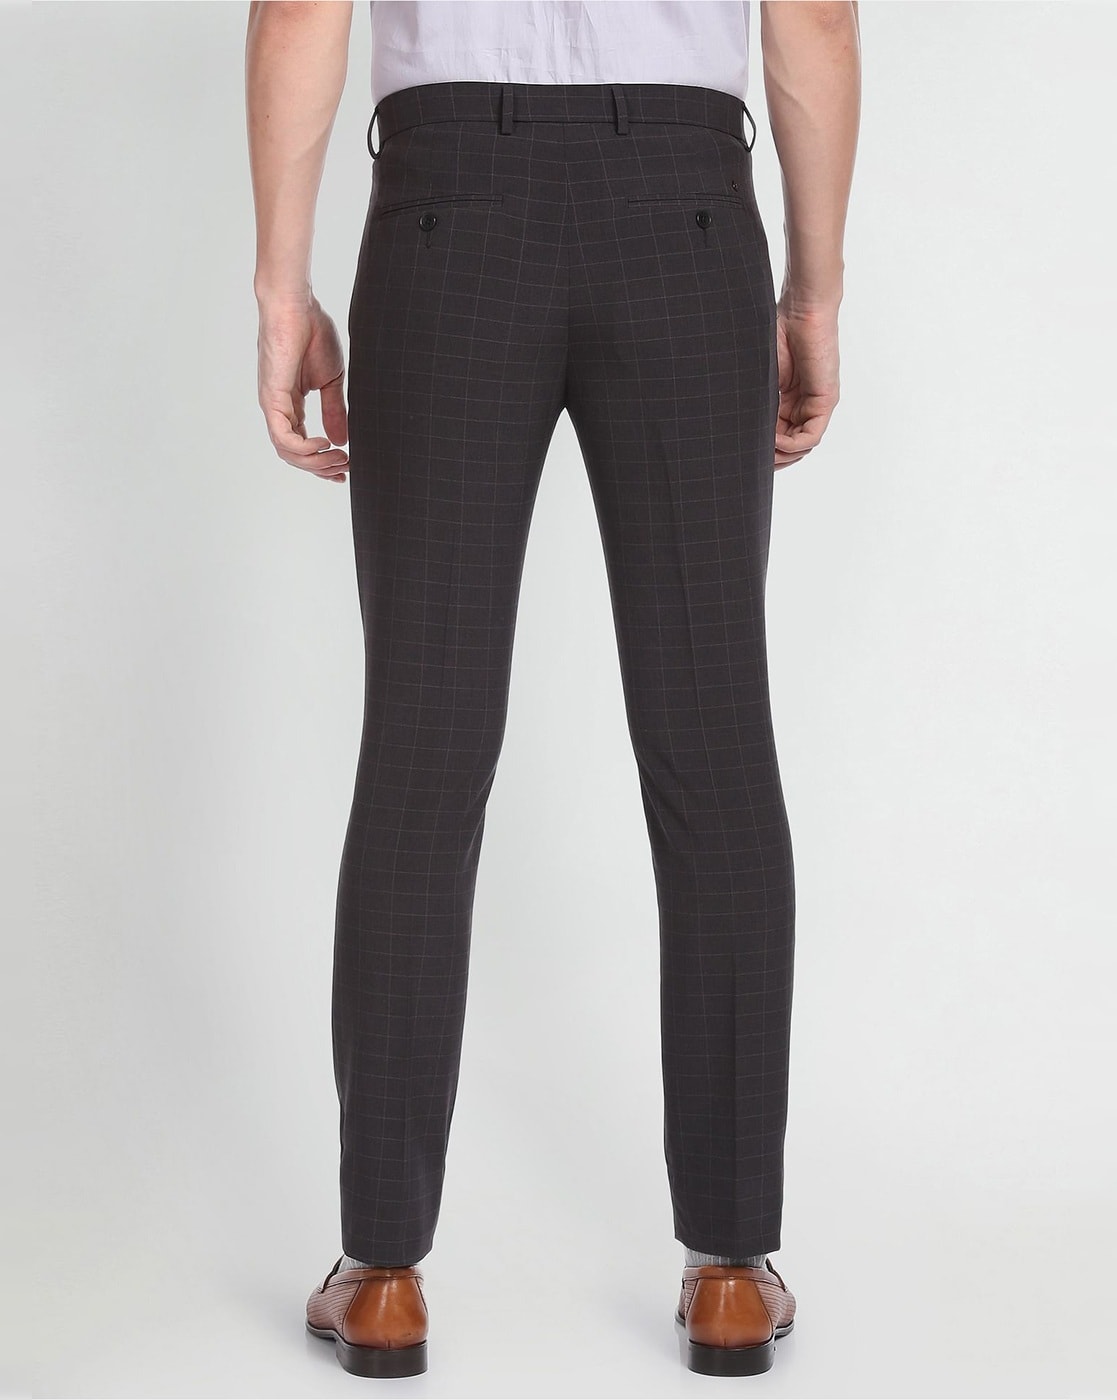 Buy ARROW Superslim Fit Solid Trouser [Black, 40] Online - Best Price ARROW  Superslim Fit Solid Trouser [Black, 40] - Justdial Shop Online.